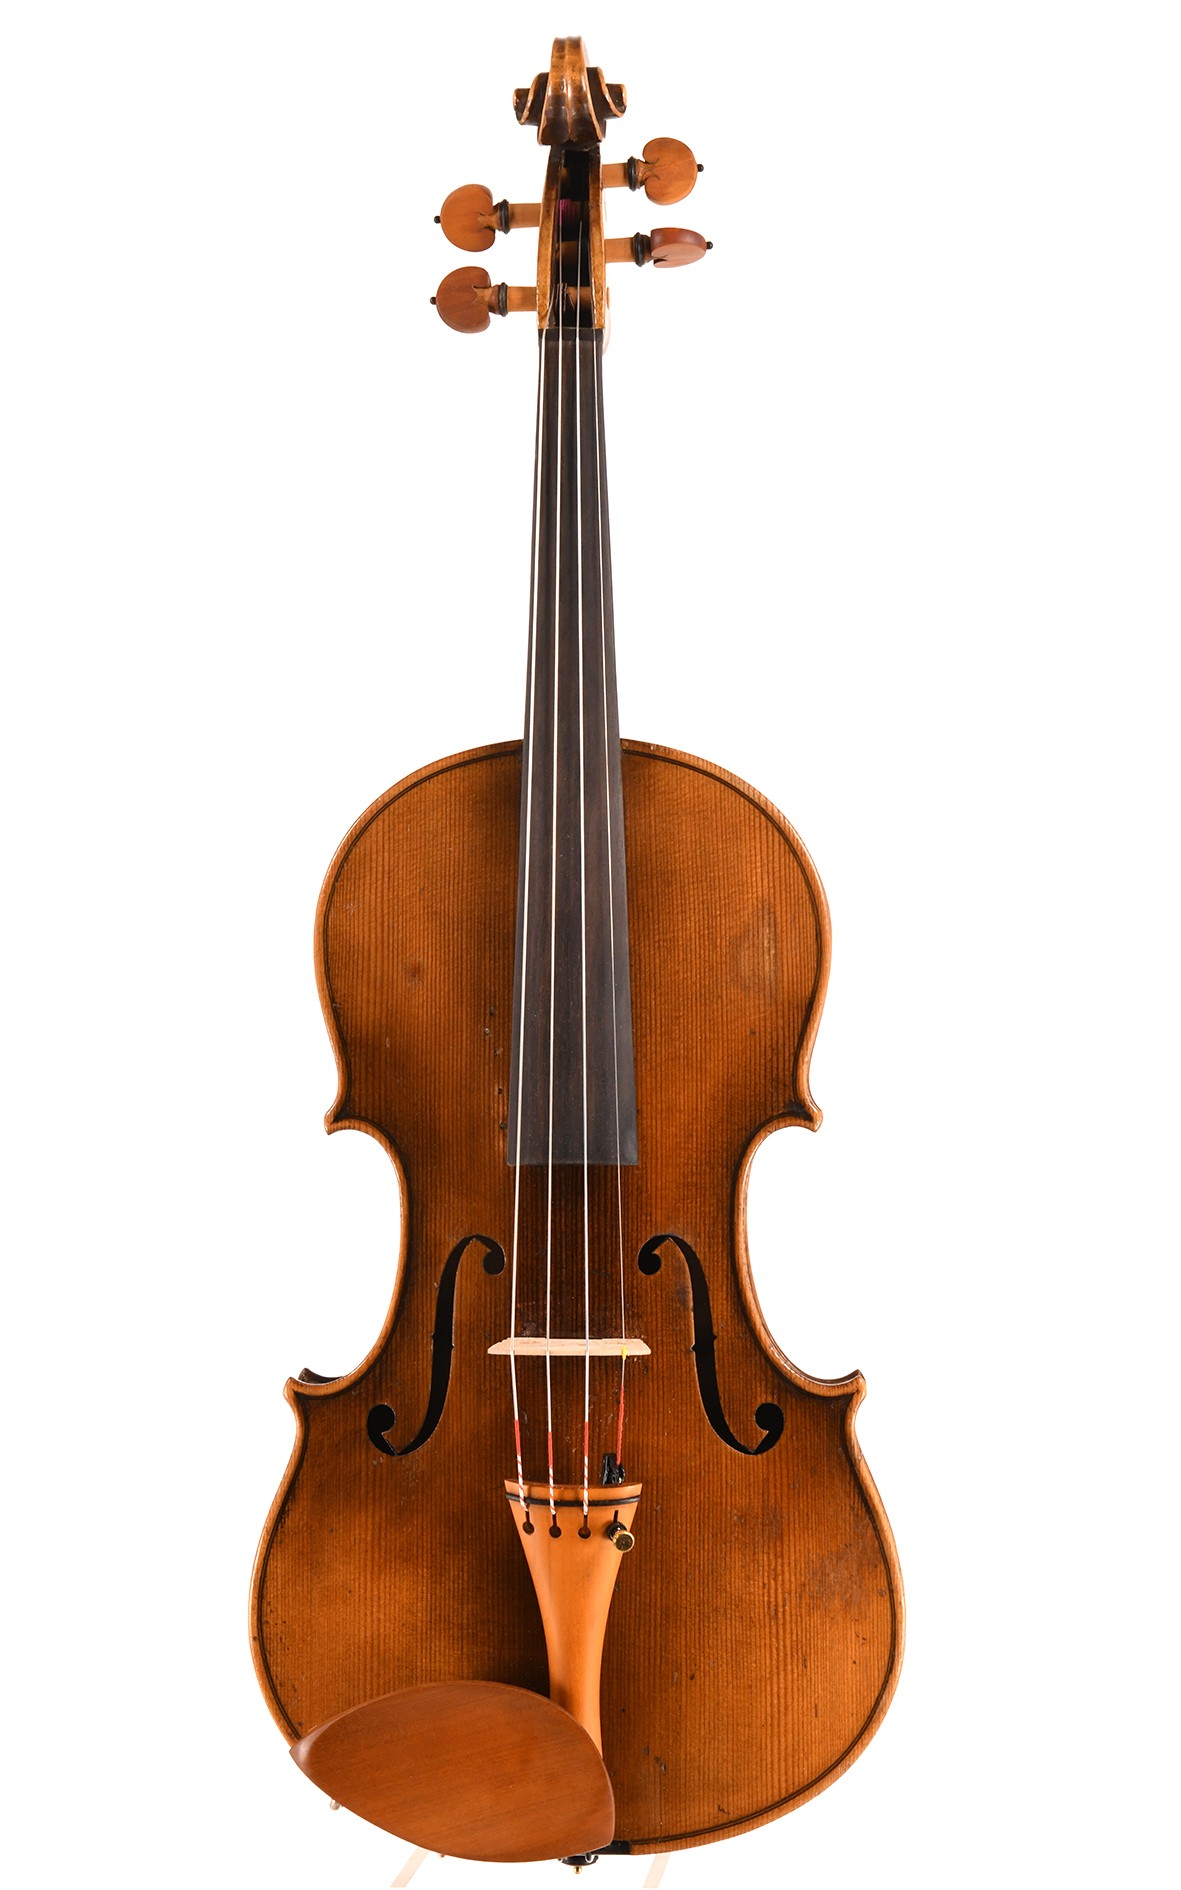 Antique Markneukirchen violin, probably Schuster & Co.